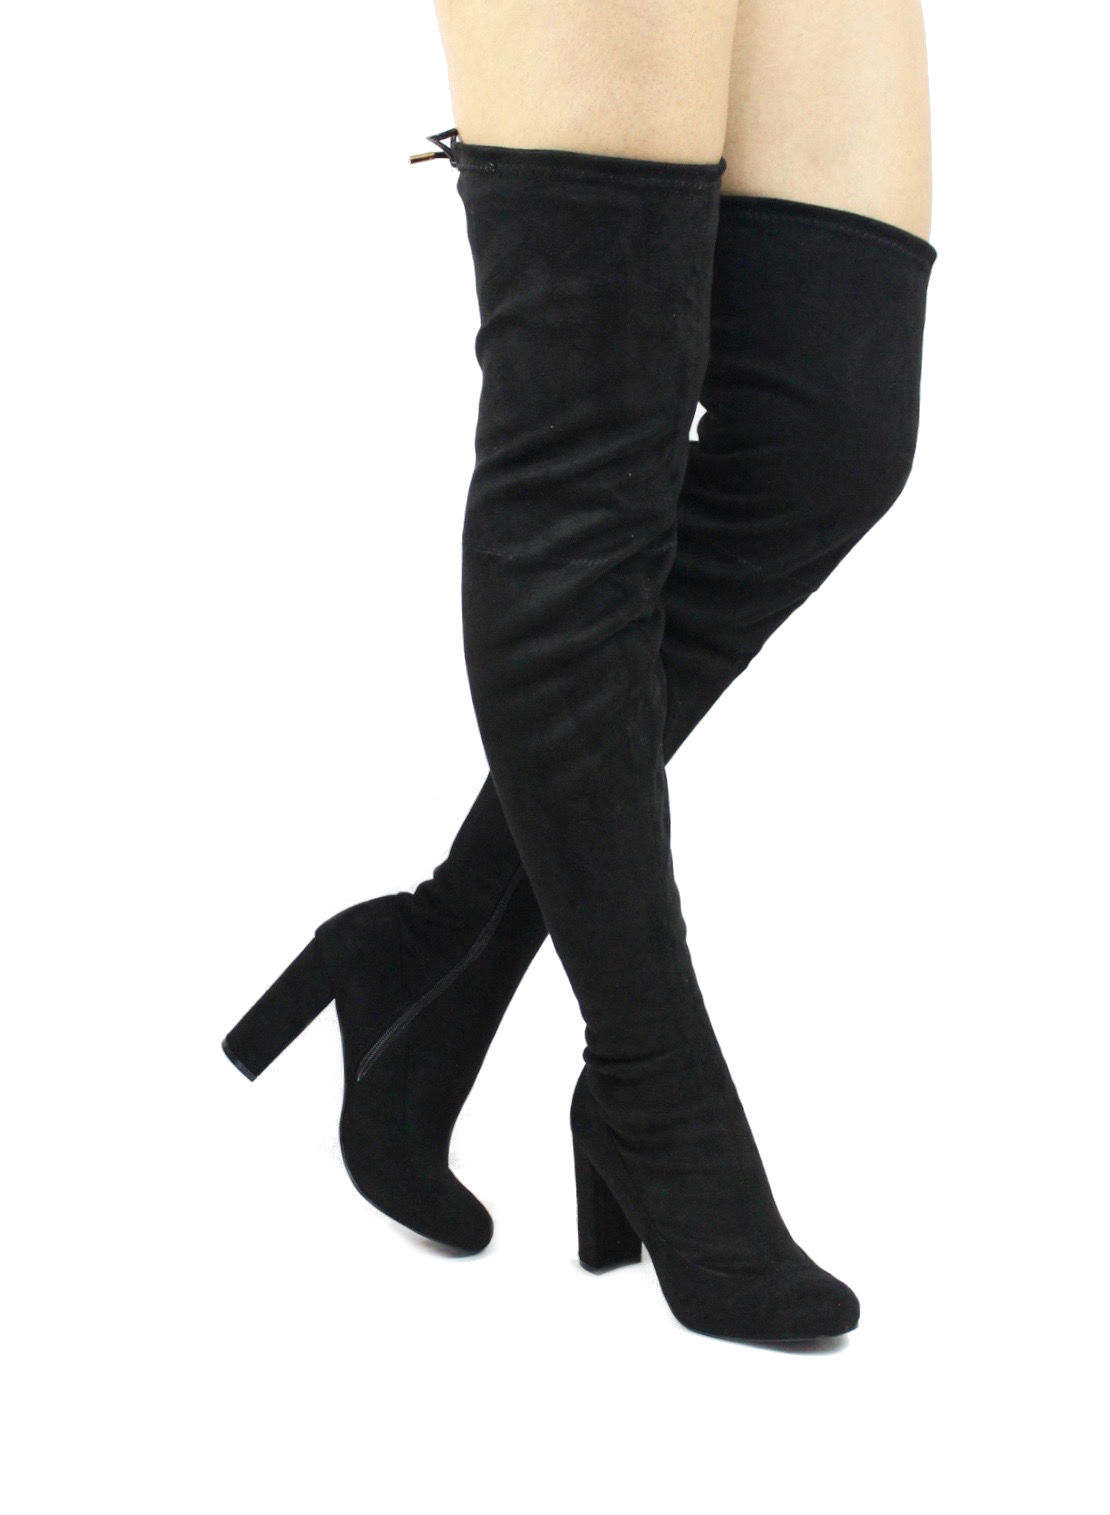 black thigh high block heel boots